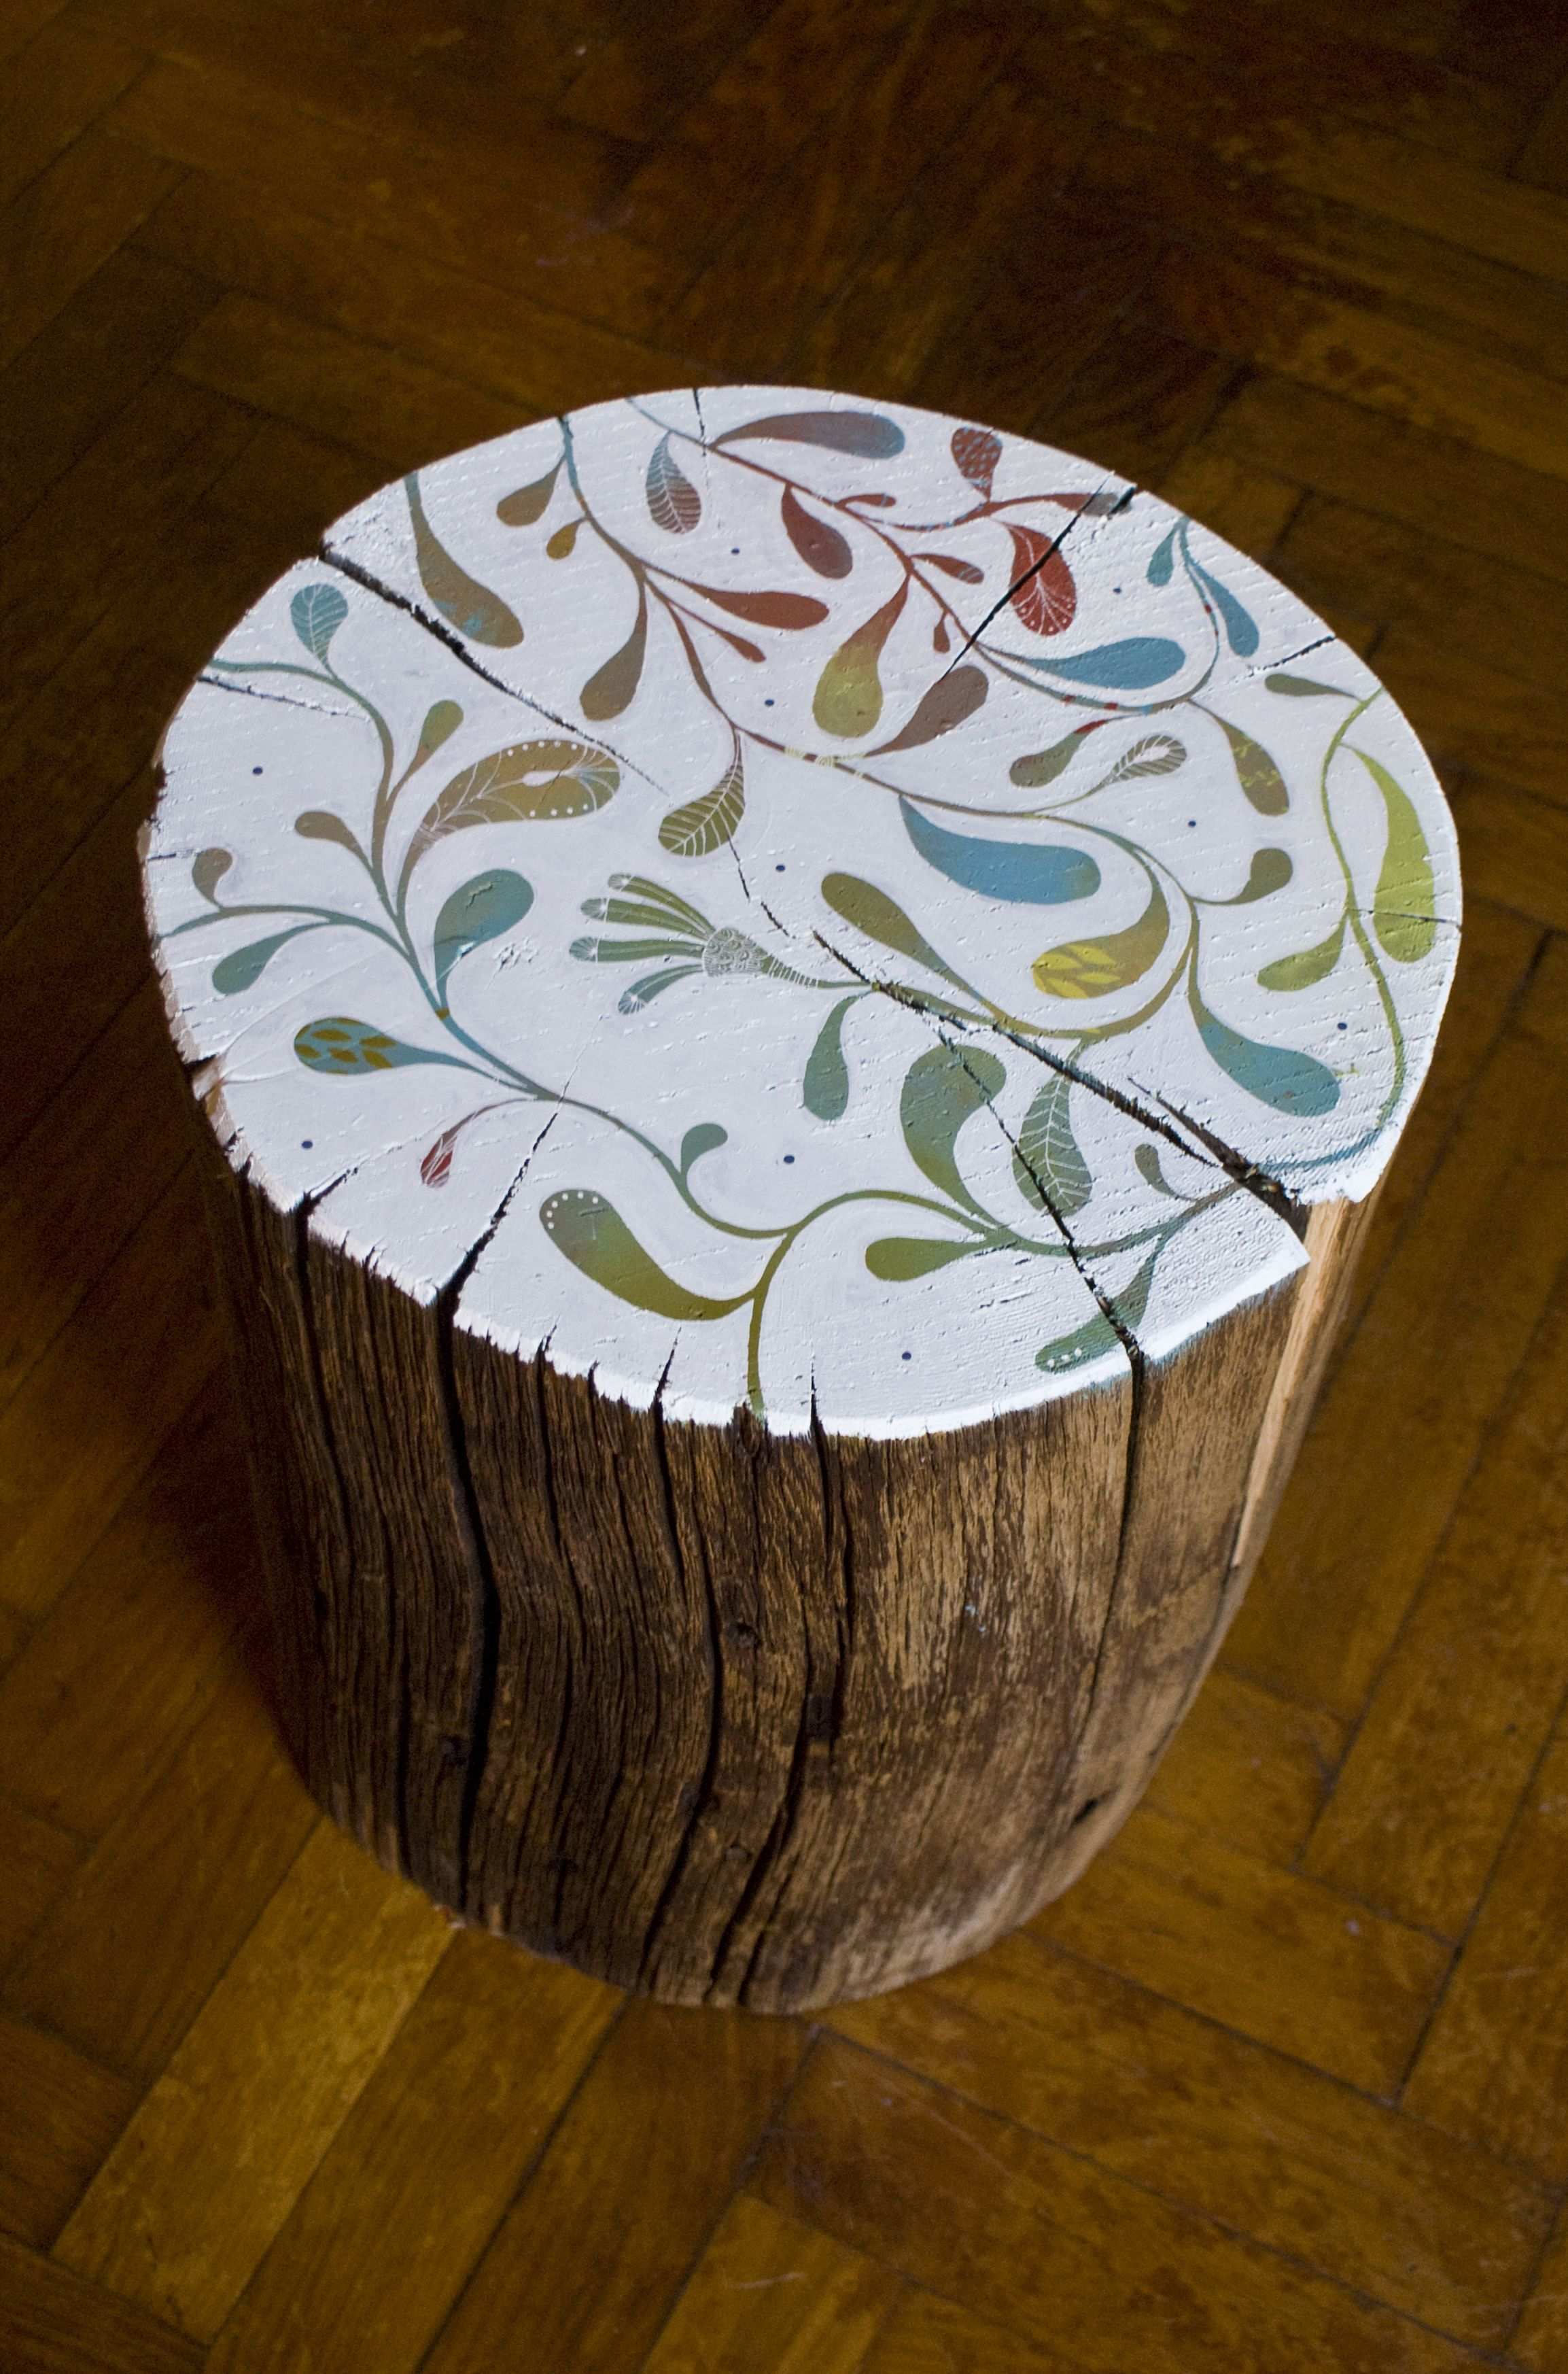 Log Table By Mondo Mombo Baumstamm Deko Bemalte Mobel Bemalte Stuhle